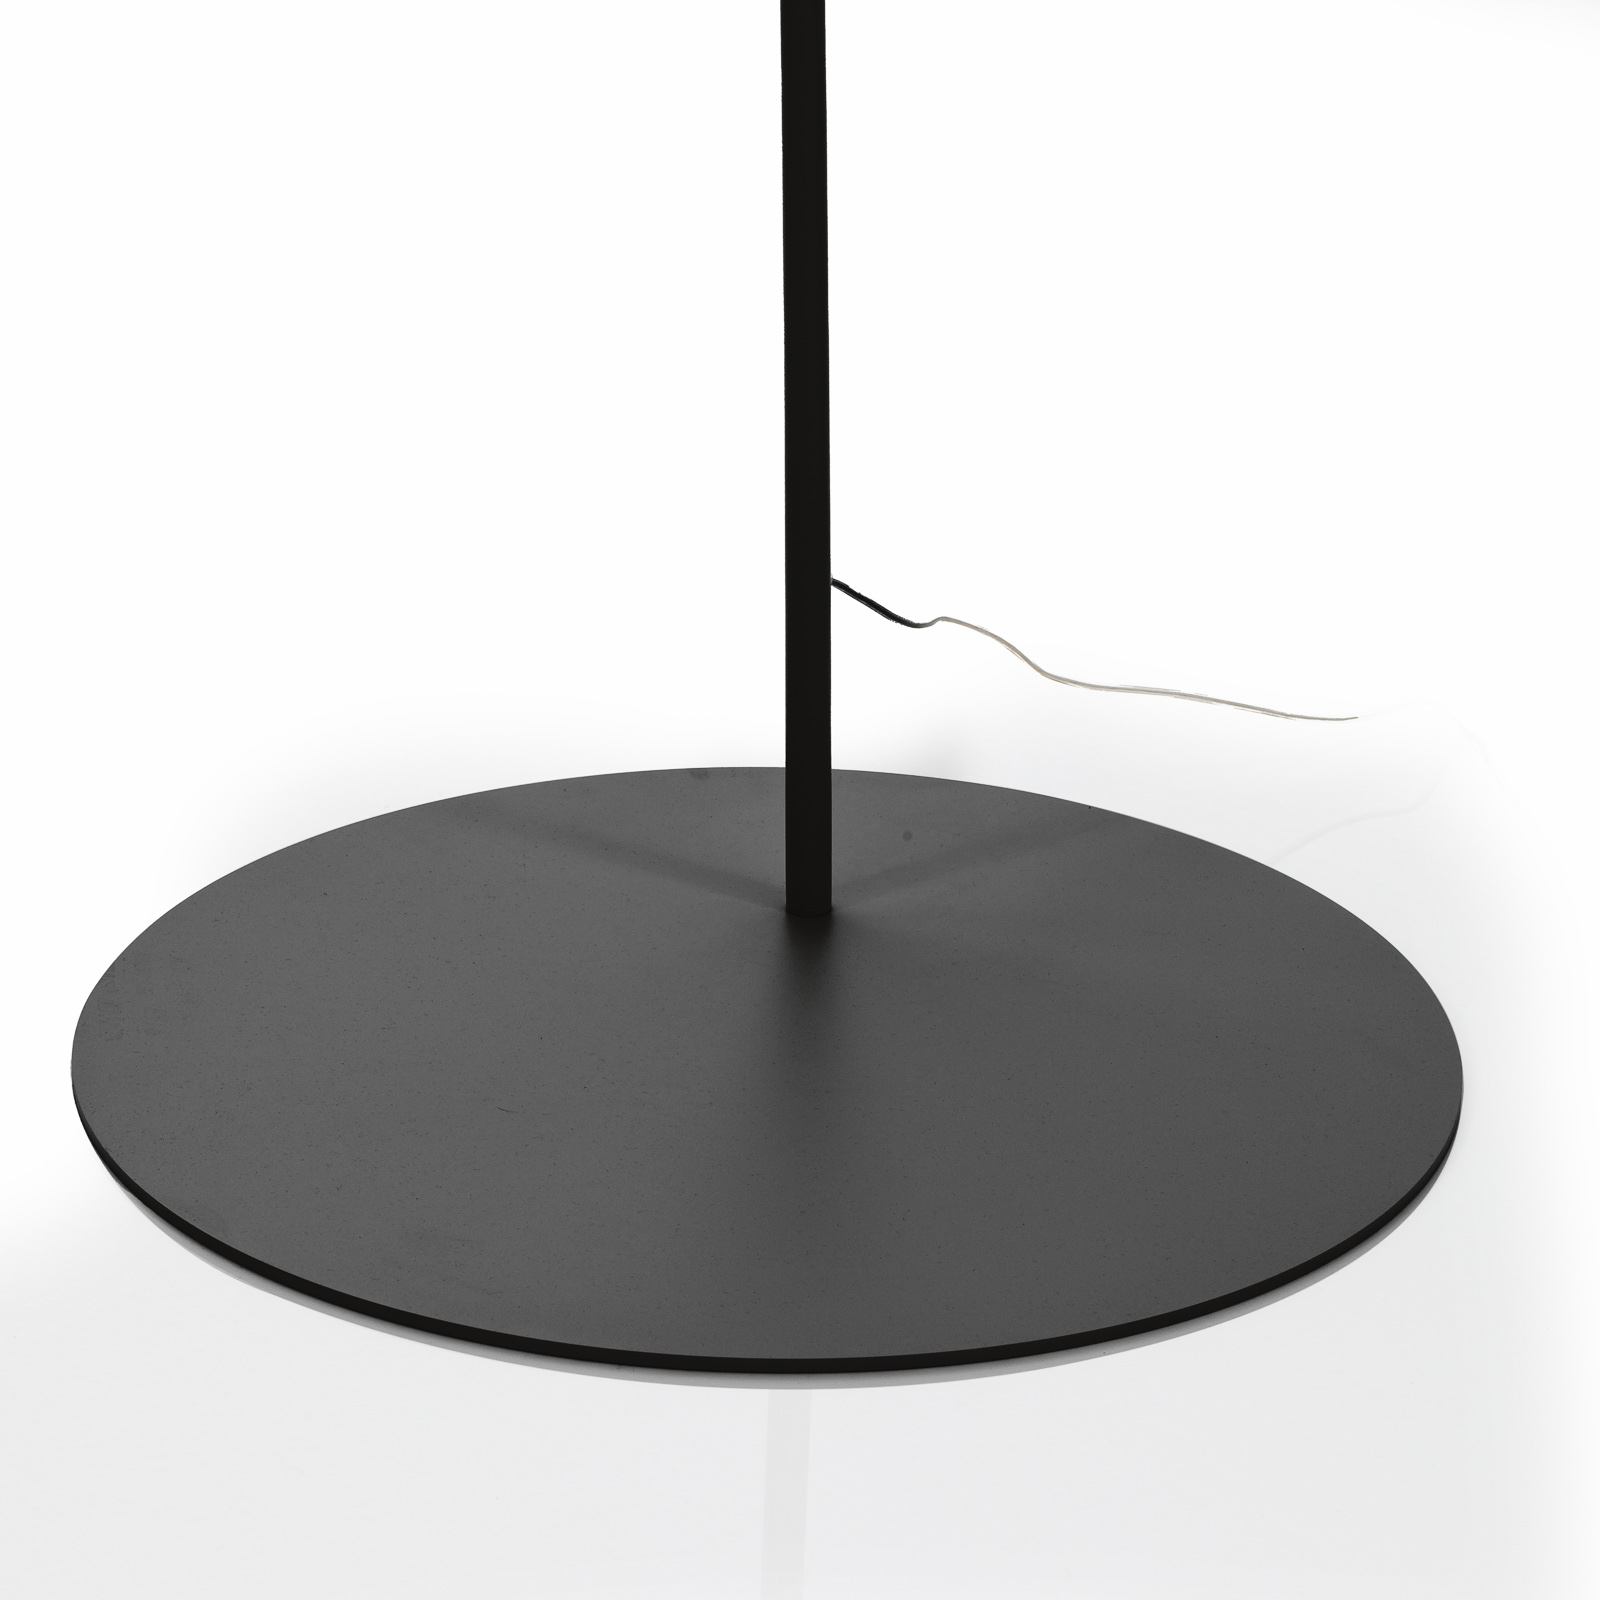 Foscarini Twiggy arc lamp with dimmer, black